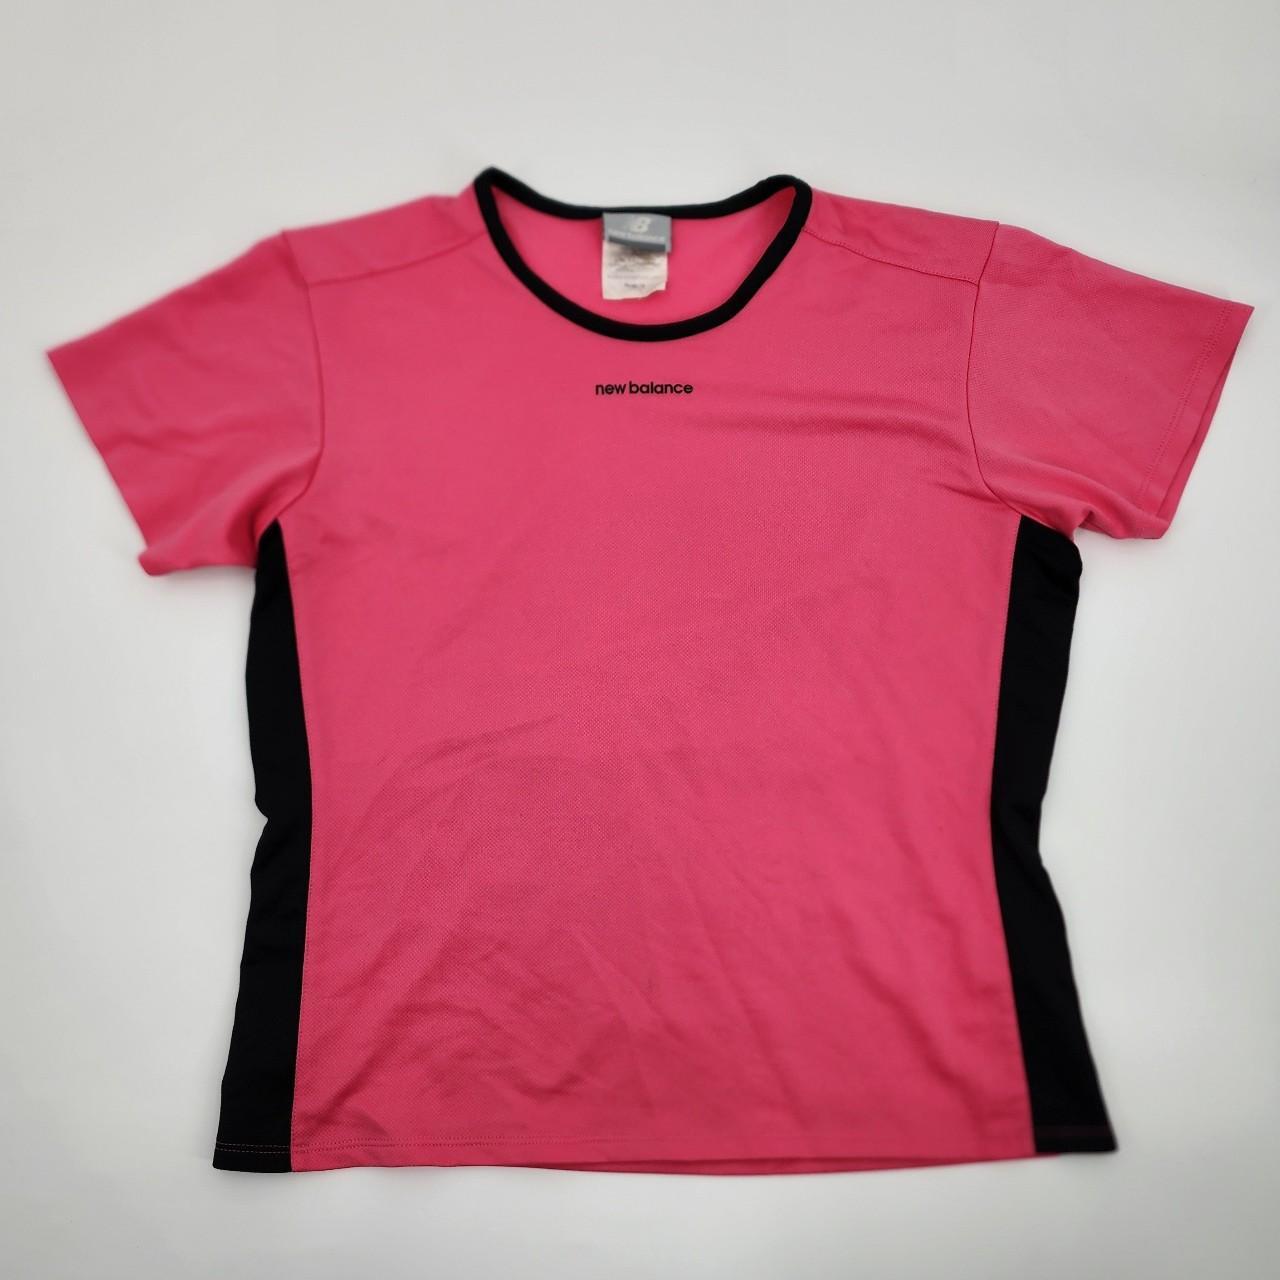 New Balance Women's Black and Pink T-shirt